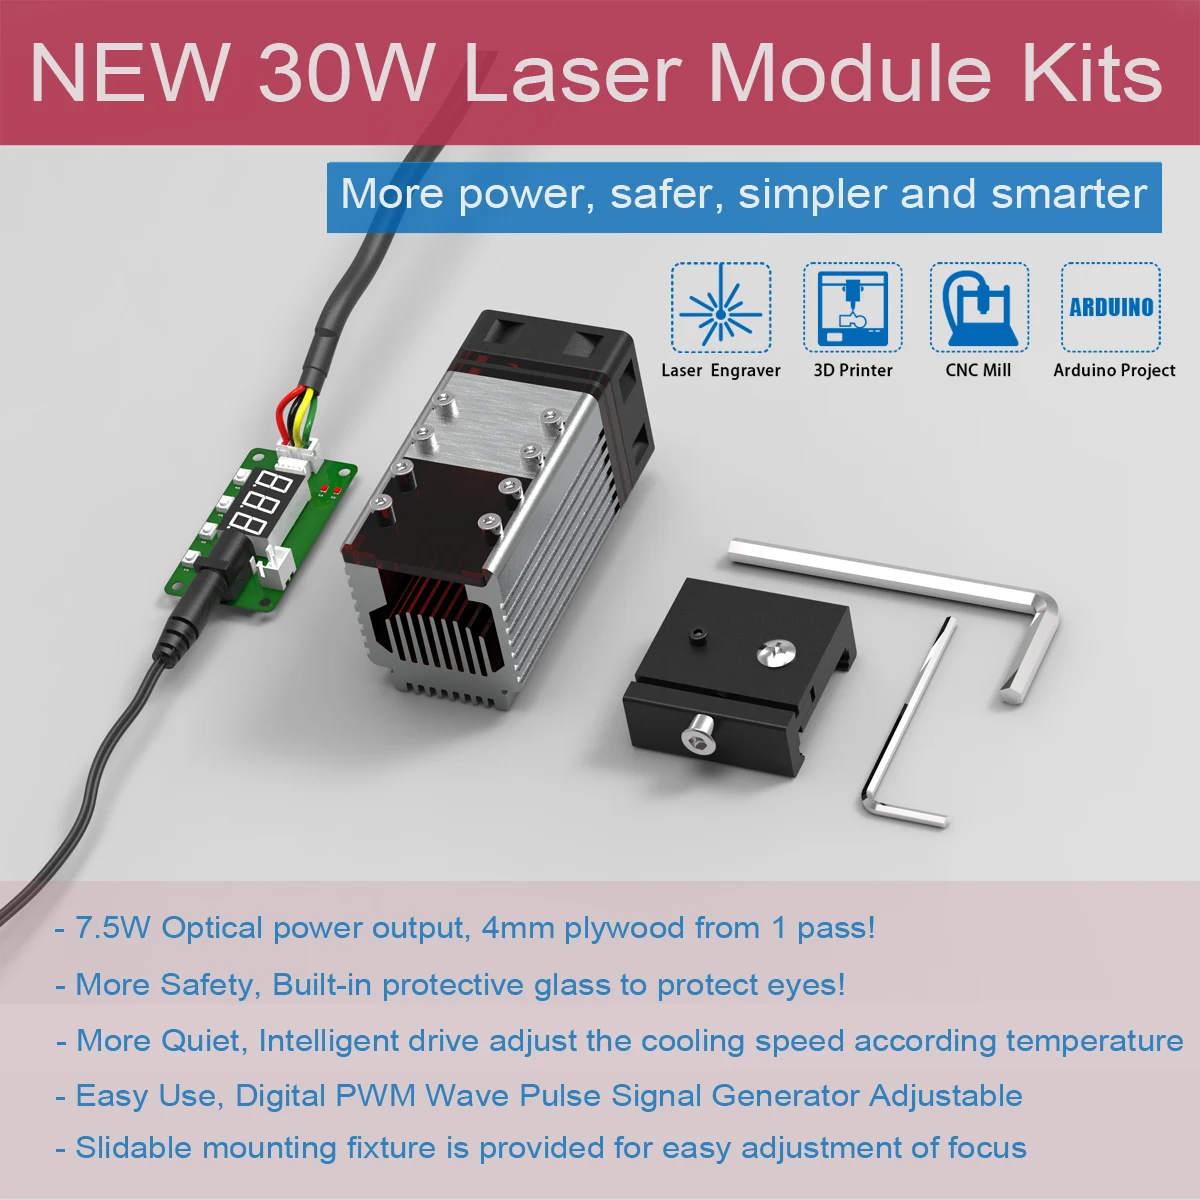 Lavet af Klassificer rygte Wholesale 30W/40W 450nm laser module kit for Neje master series mini  engraver accessory DIY Tools Laser Module Head From m.alibaba.com